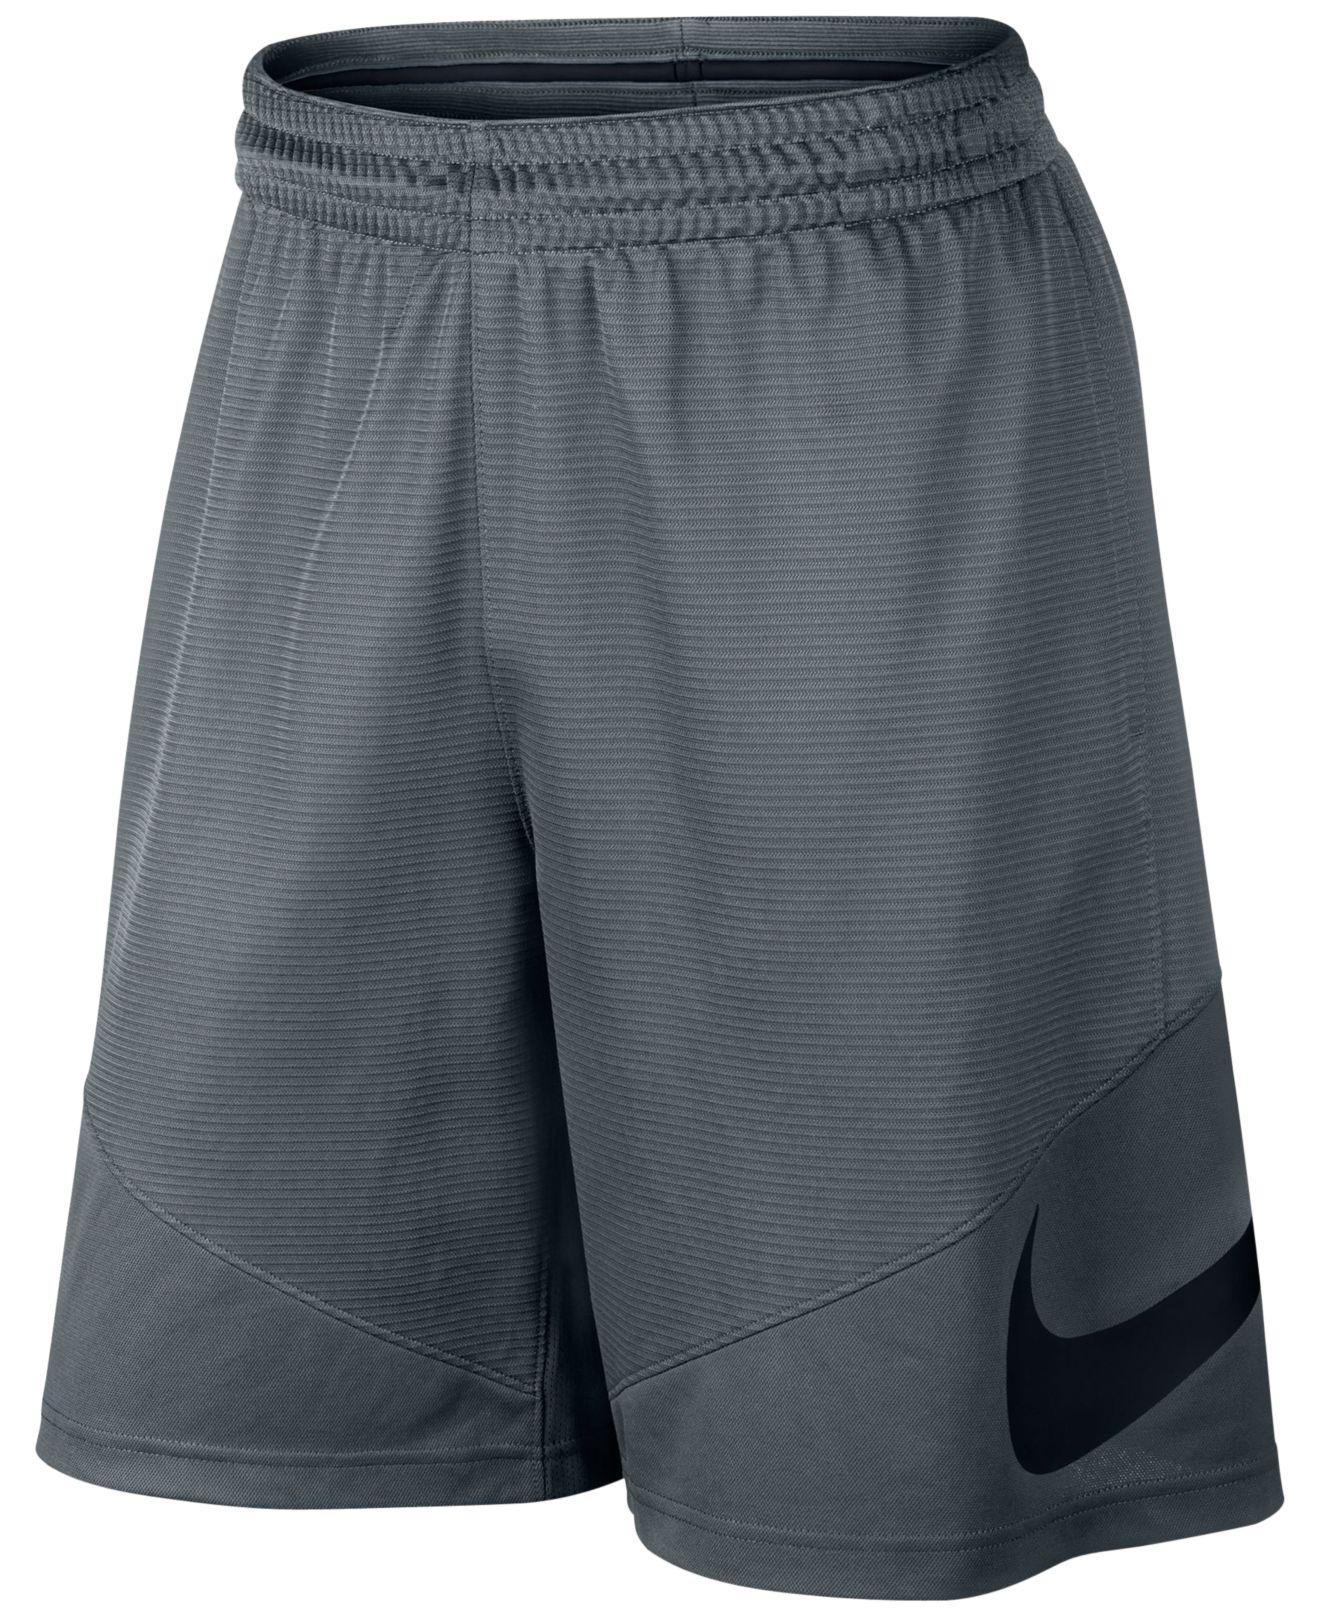 Lyst - Nike Men's Hbr Dri-fit Basketball Shorts in Gray for Men